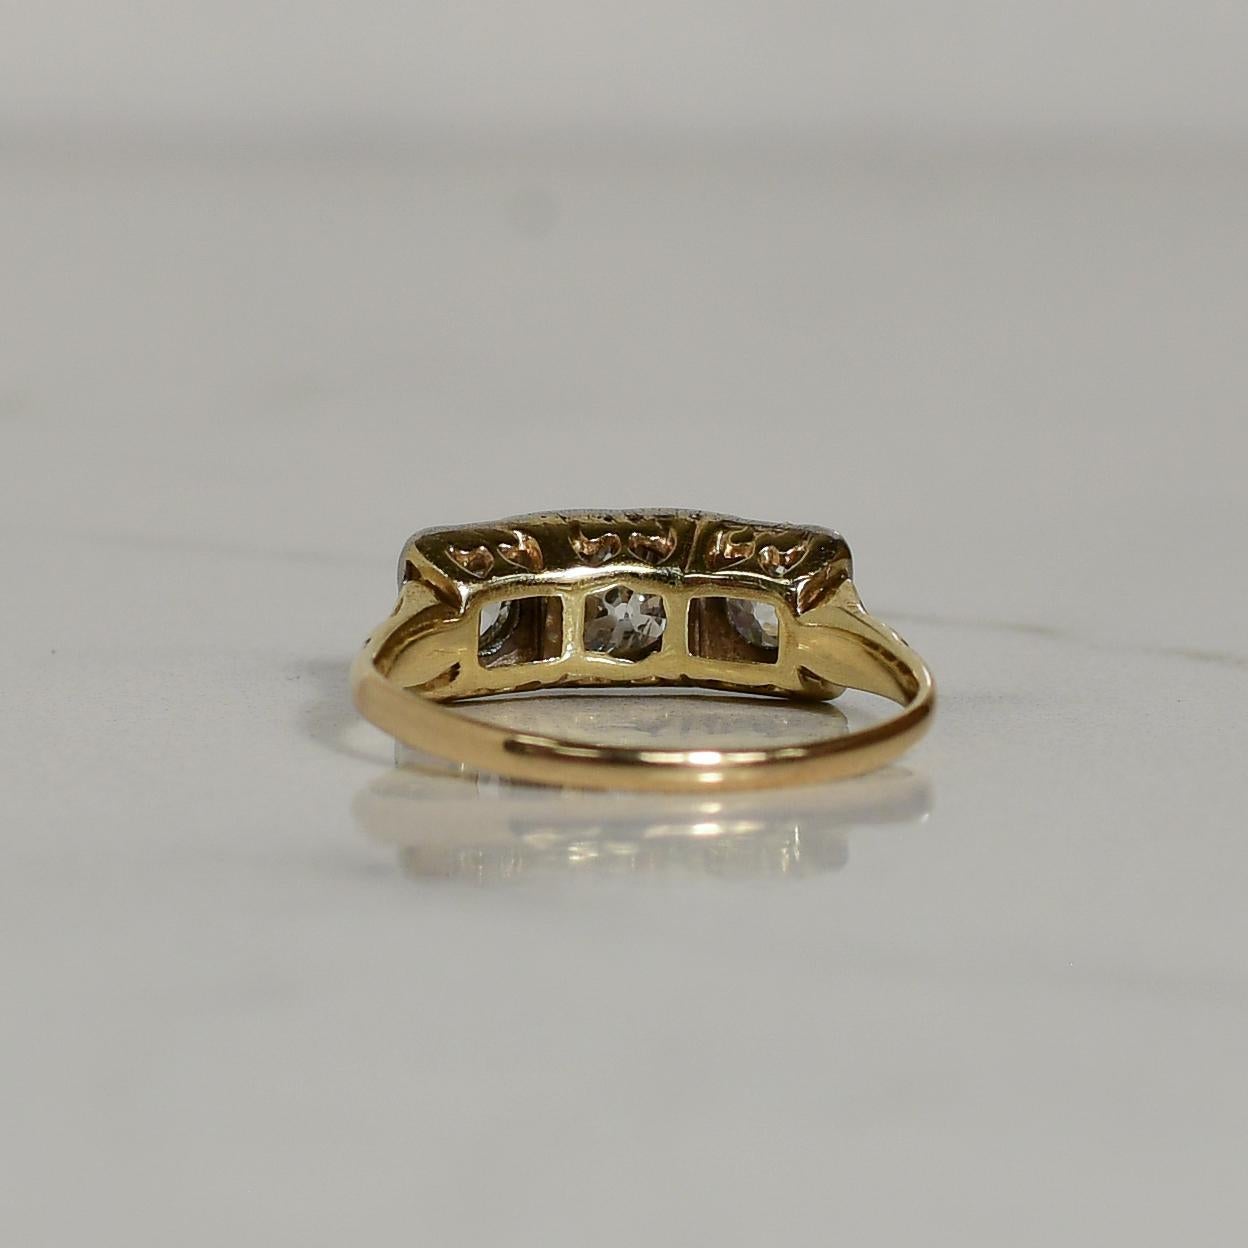 Women's 1.3cttw Art Deco 3 Stone Old European Cut Diamond Ring in 14K Gold & Platinum